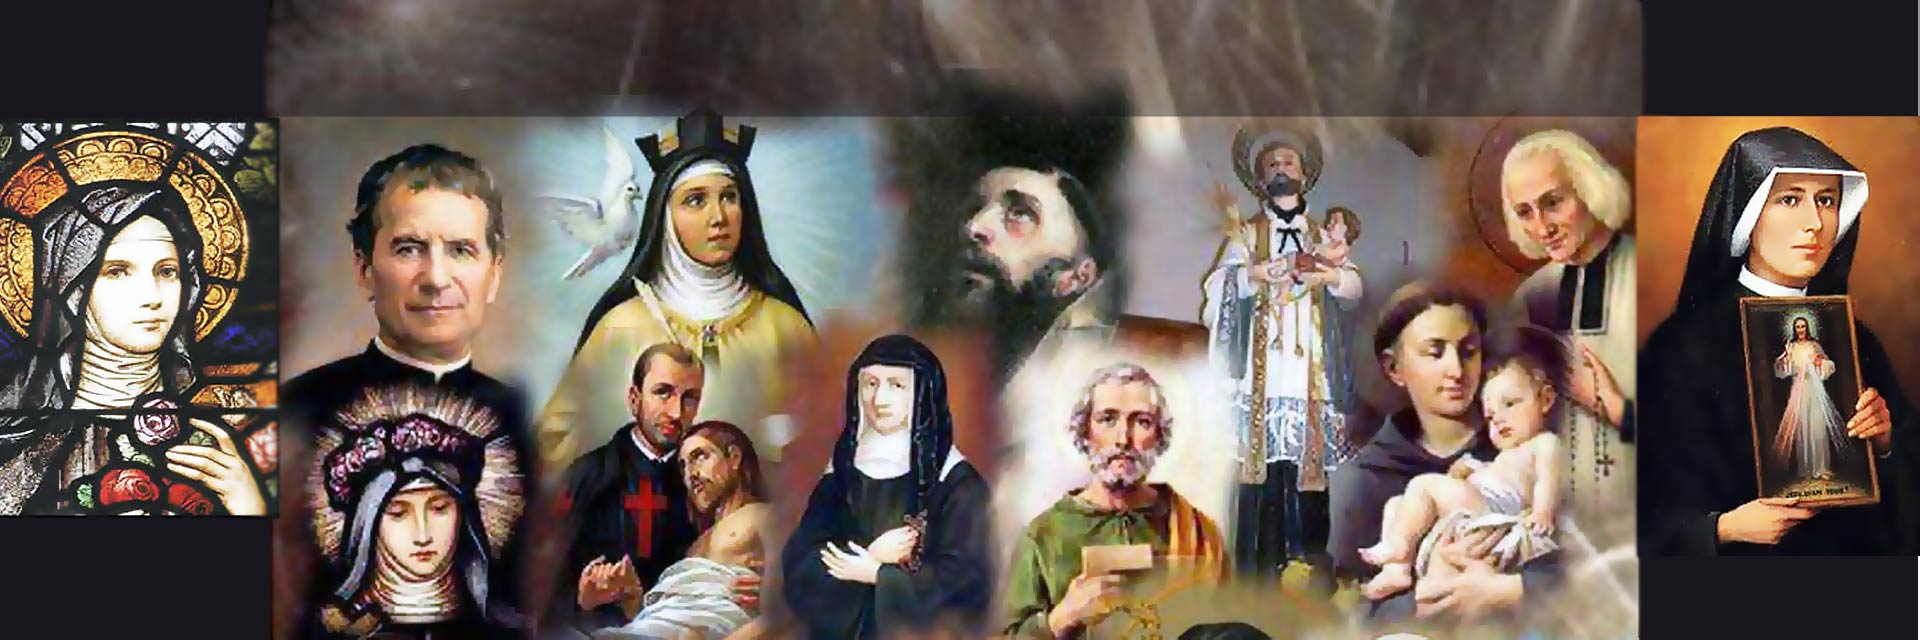 List of Saints